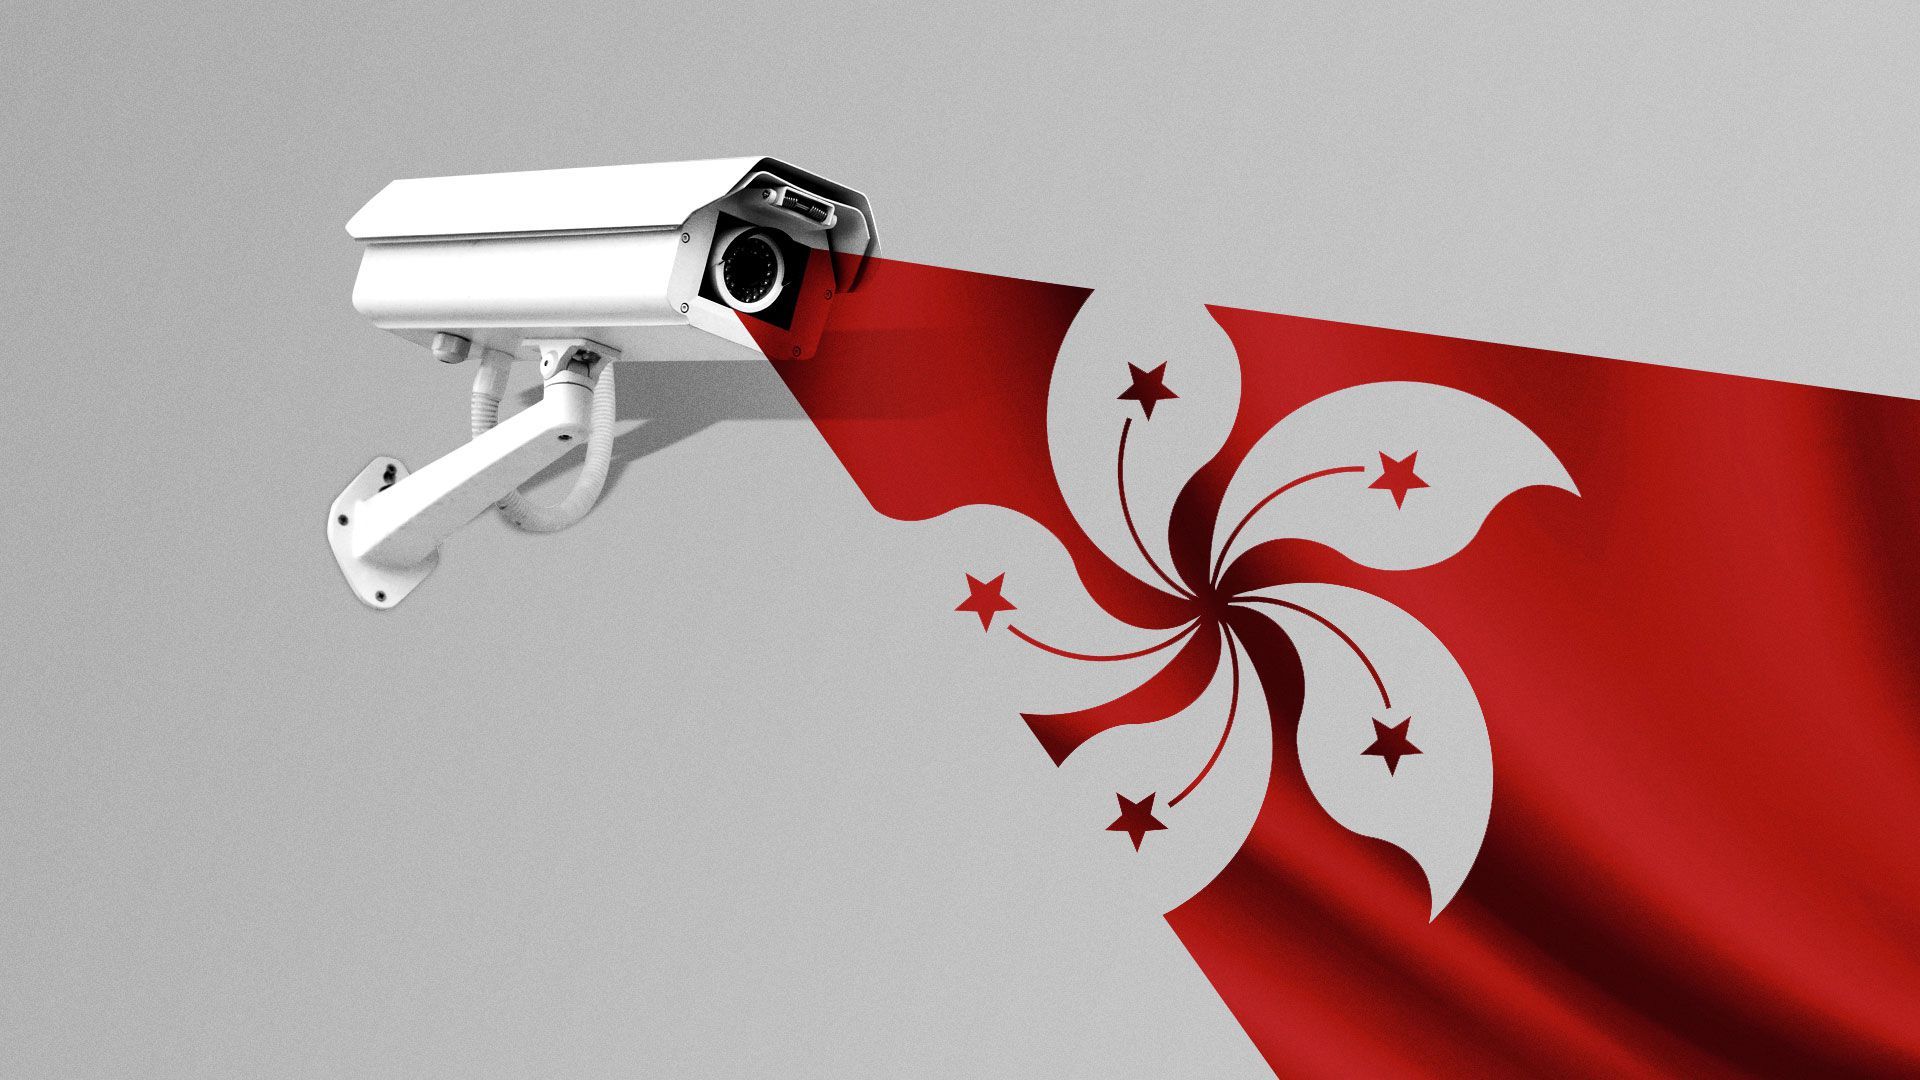 Illustration of security camera highlighting the Hong Kong flag